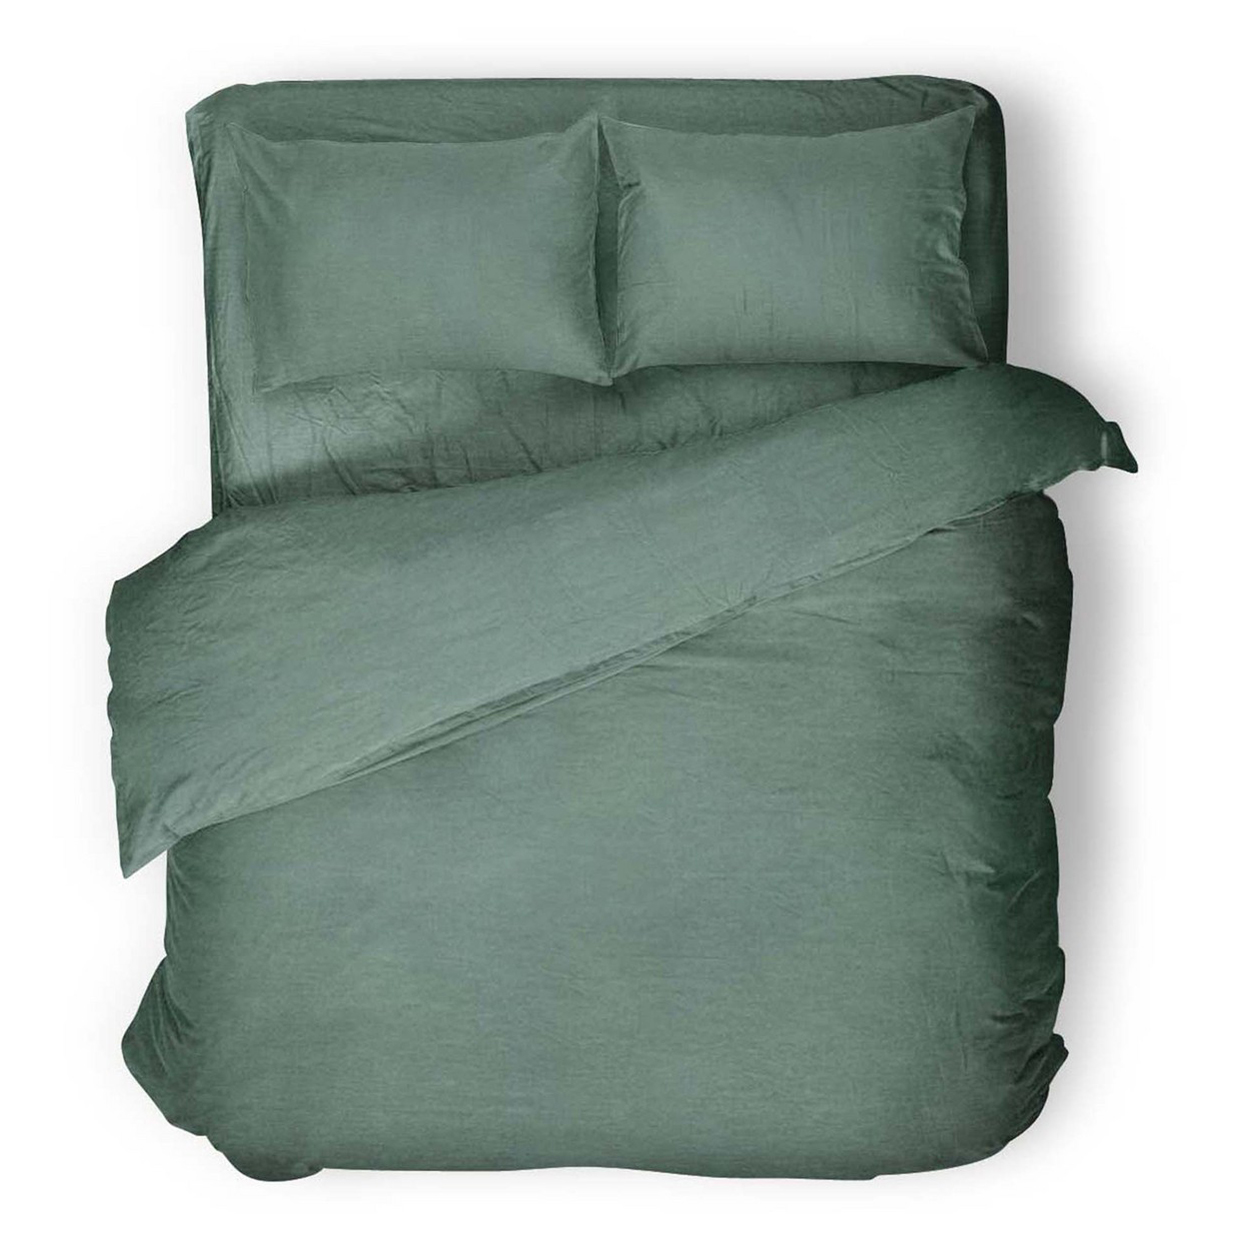 Простыня Absolut Emerald 220x240 см меланж зеленая